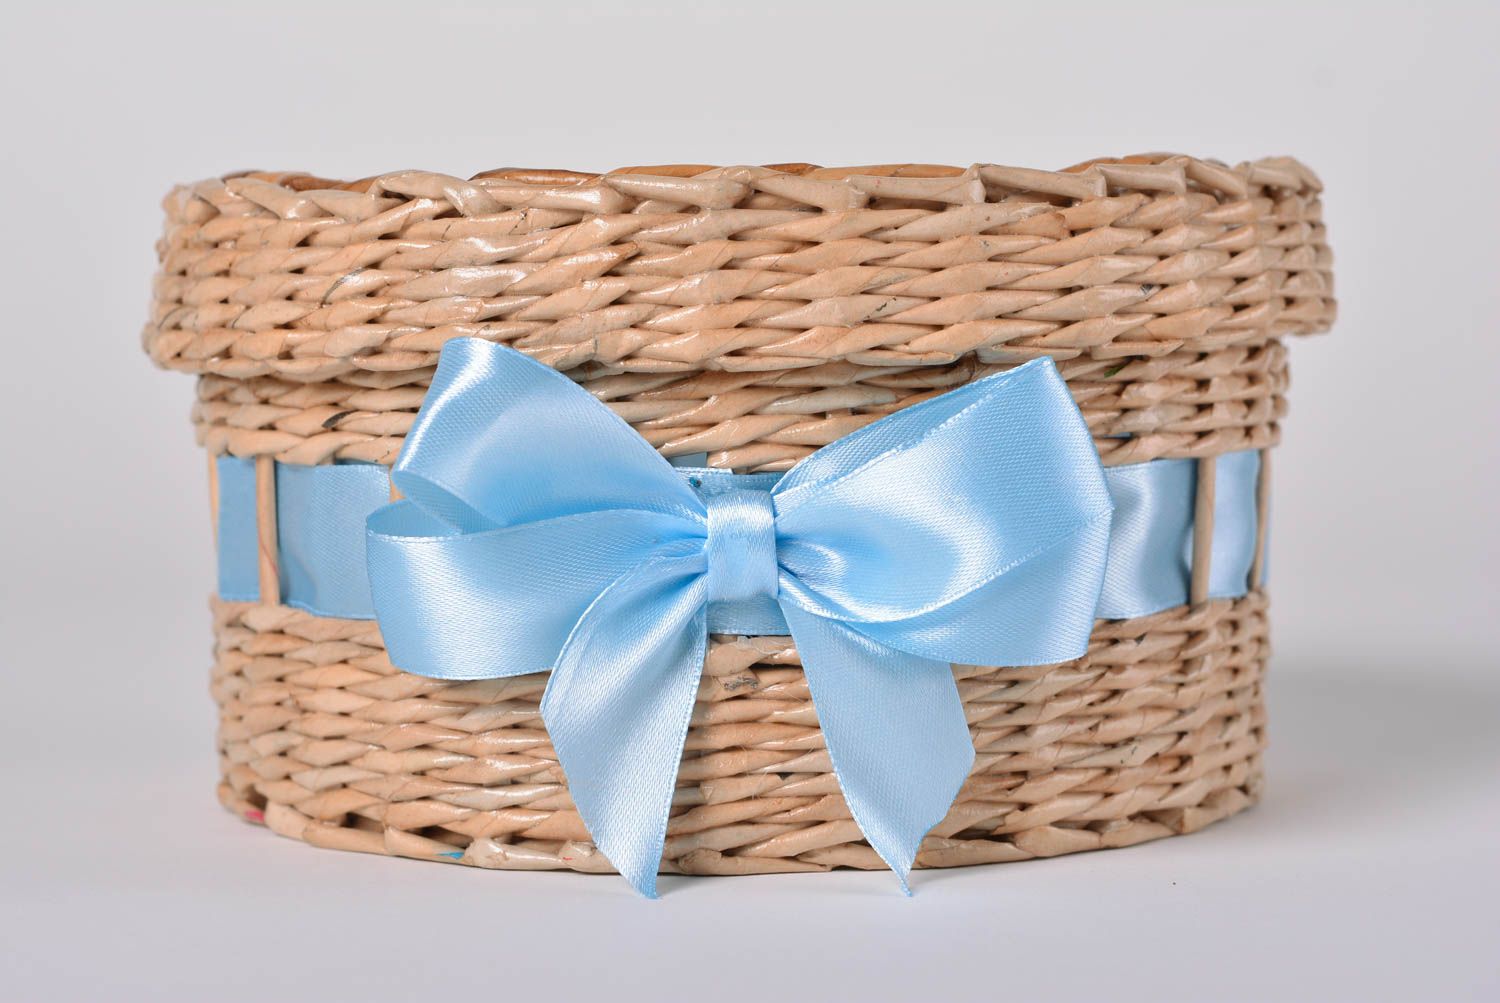 Unusual handmade paper basket woven newspaper basket home design gift ideas  photo 1